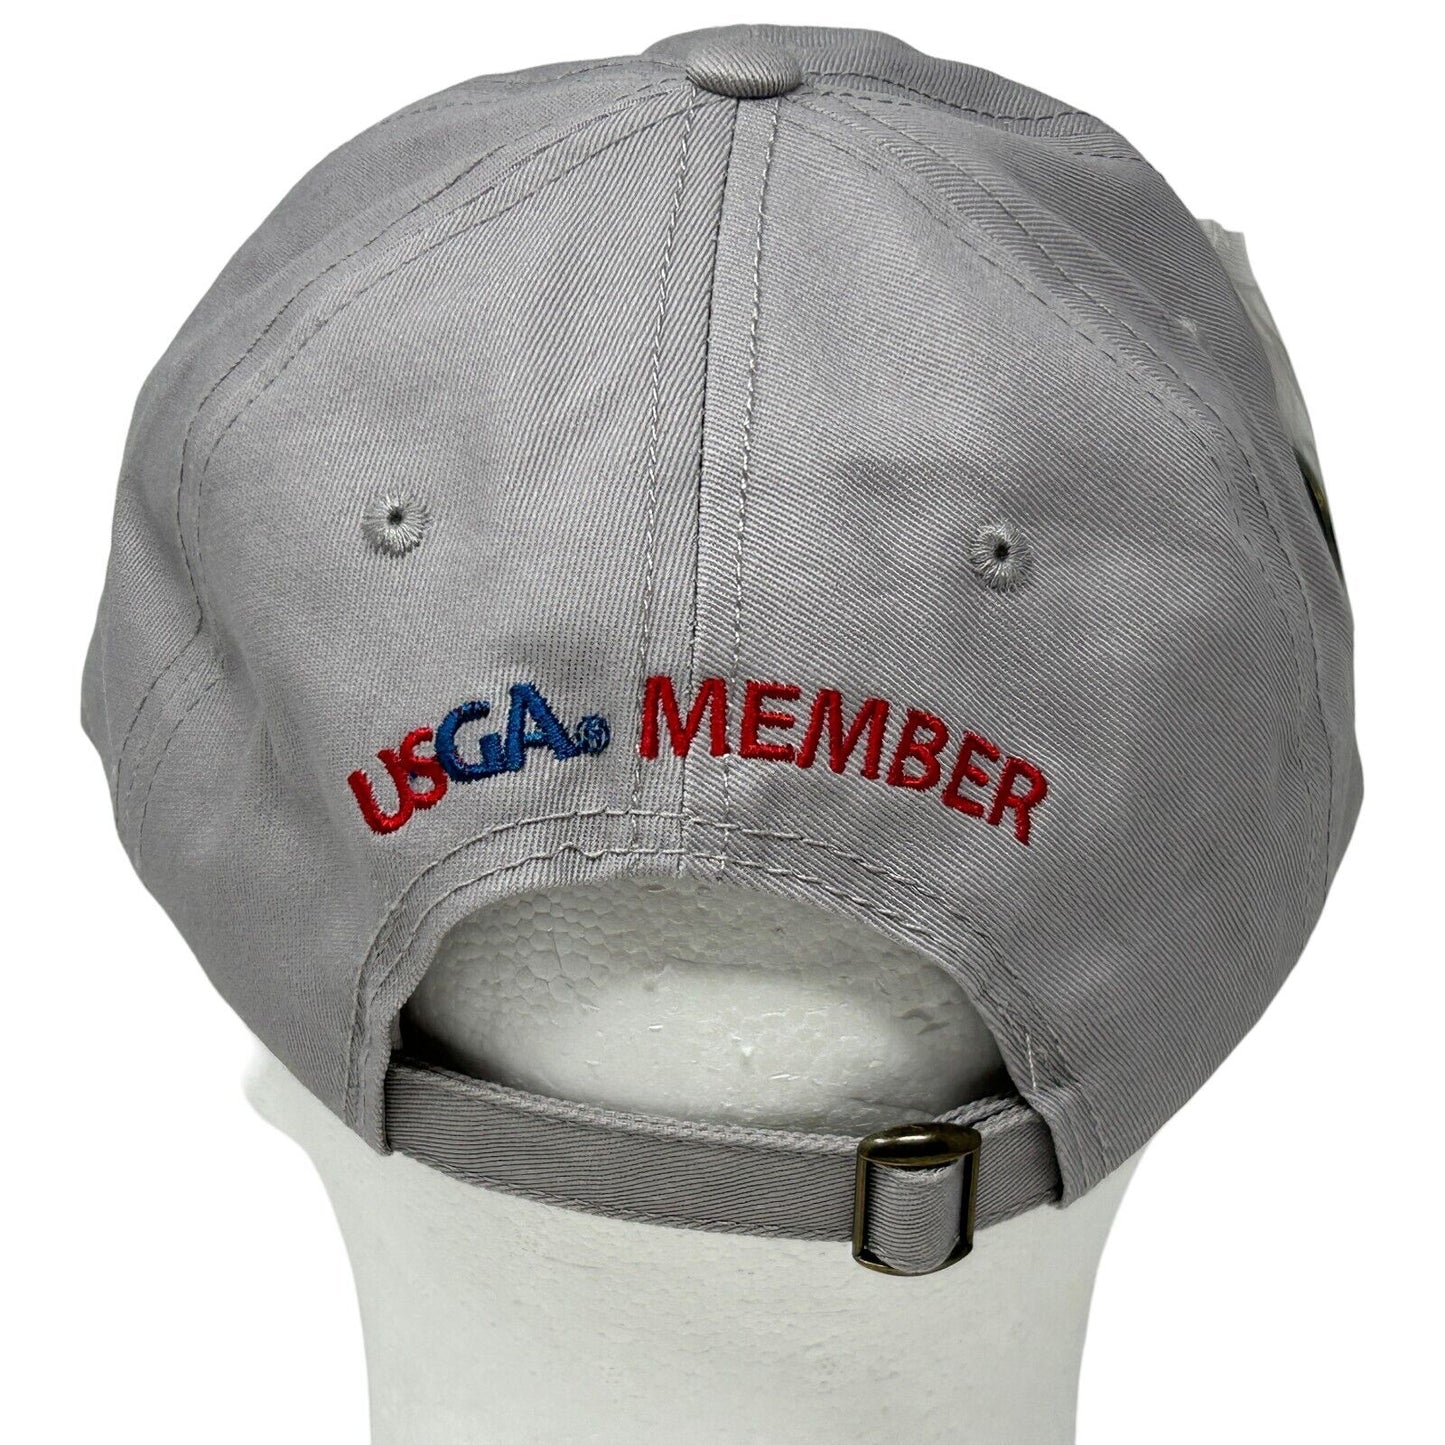 2016 US Open Oakmont Country Club Dad Hat Golf Ball Marker Gray Baseball Cap